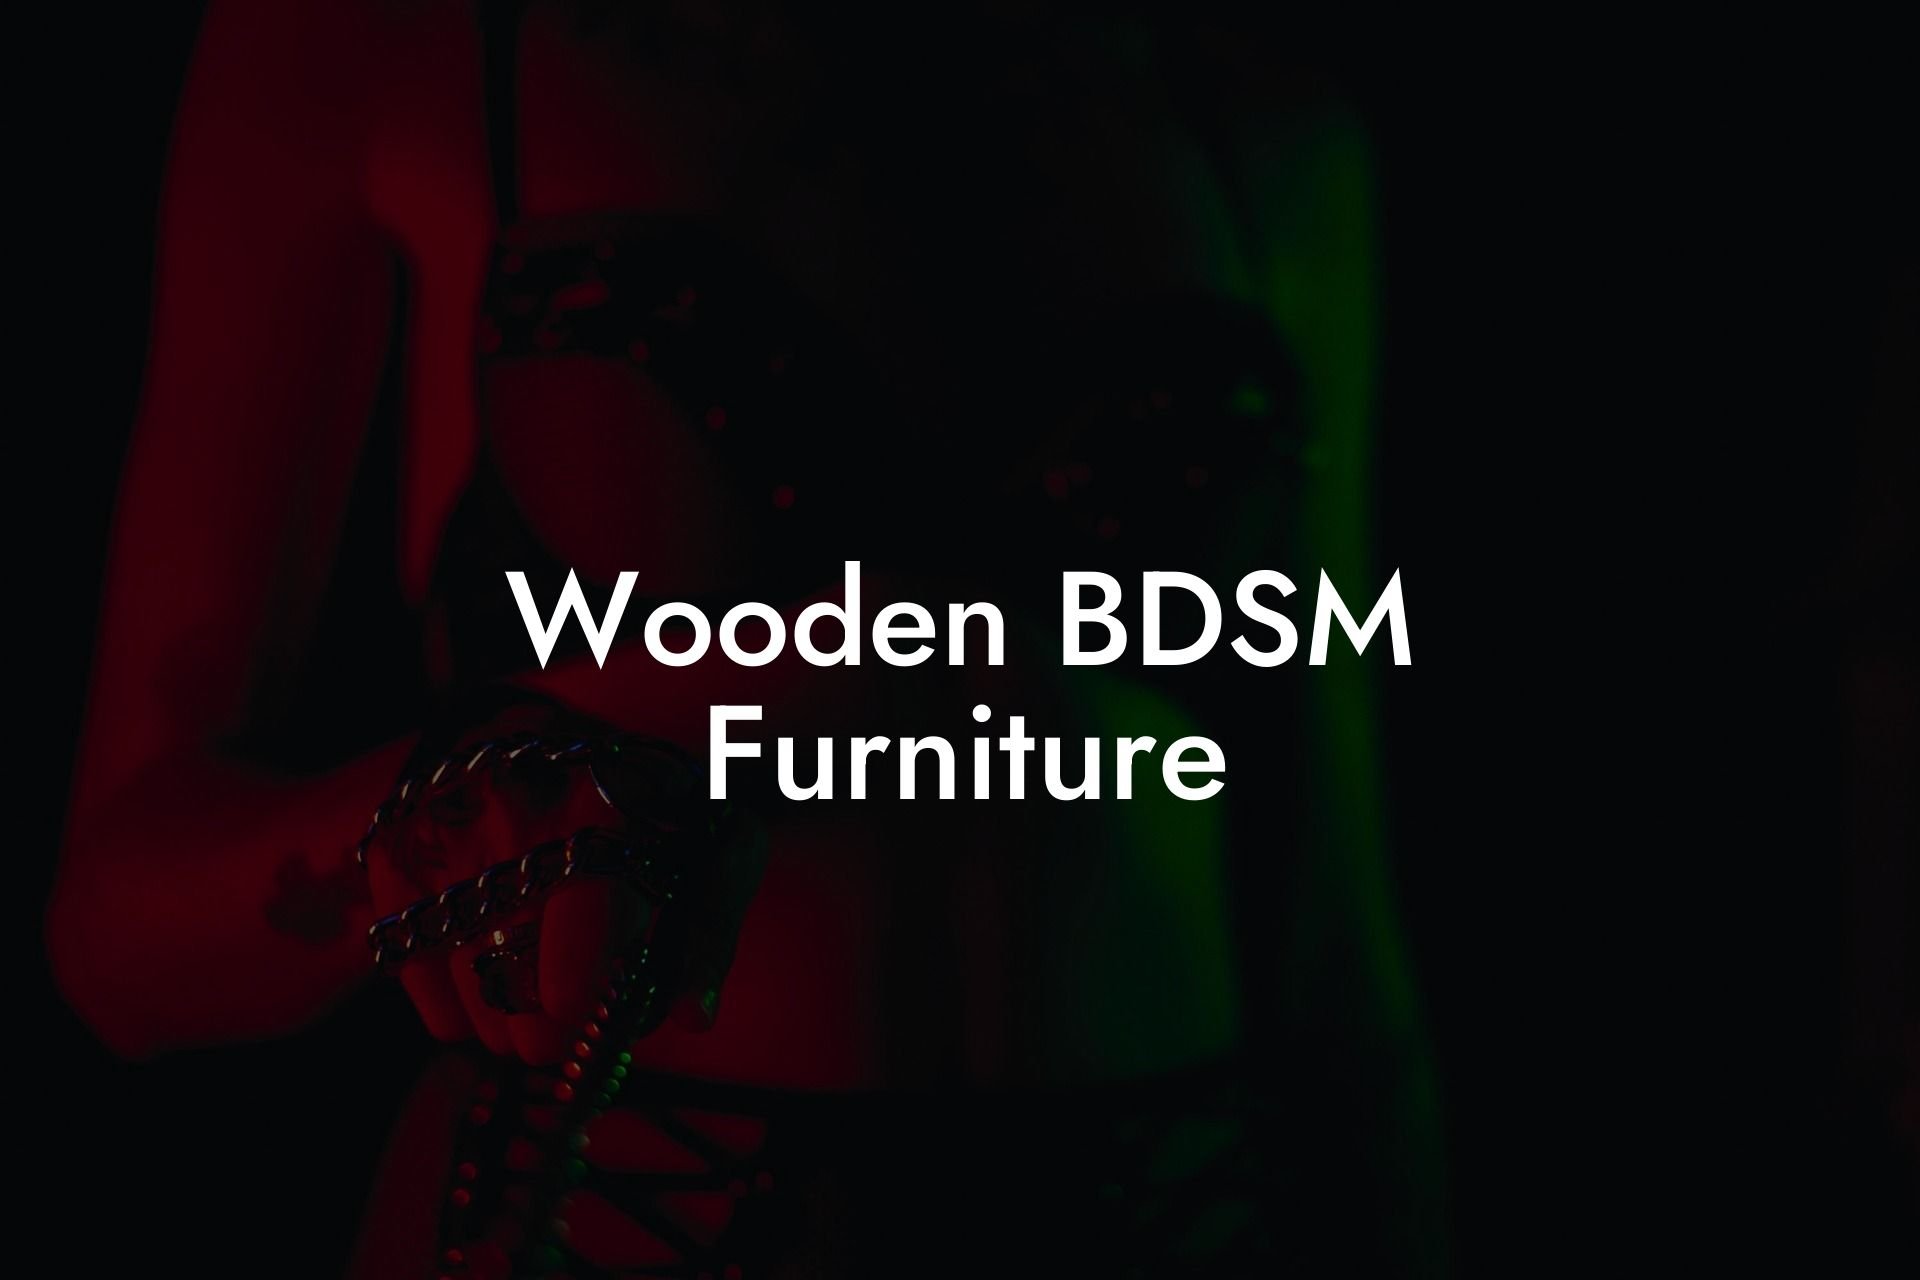 Wooden BDSM Furniture